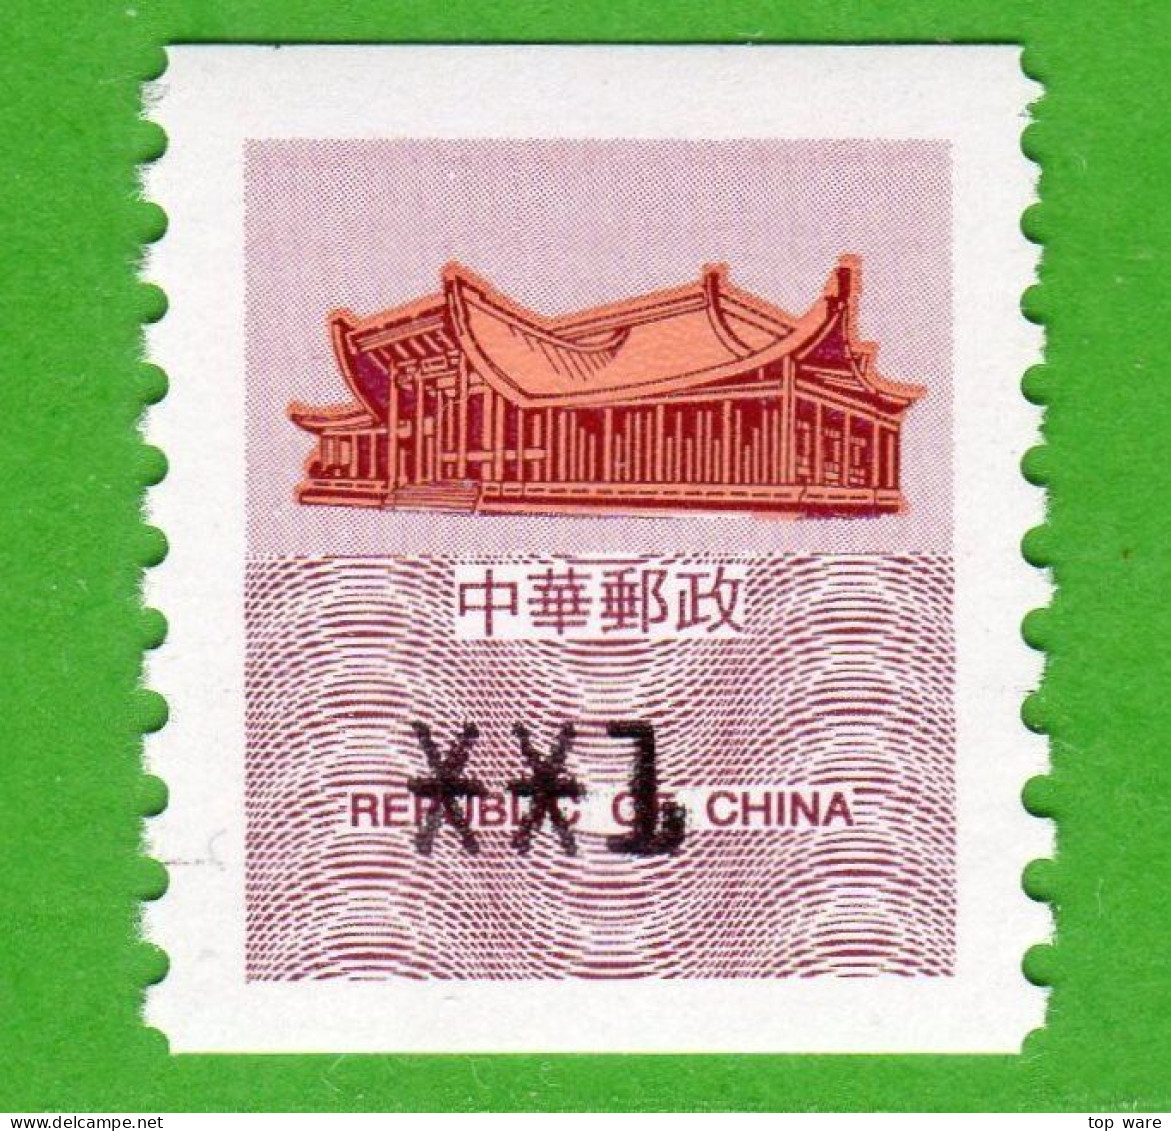 1995 Automatenmarken China Taiwan Sun-Yatsen Memorial Hall / Michel 1 / ATM Xx1 MNH / Unisys Kiosk Etiquetas Automatici - Automaten